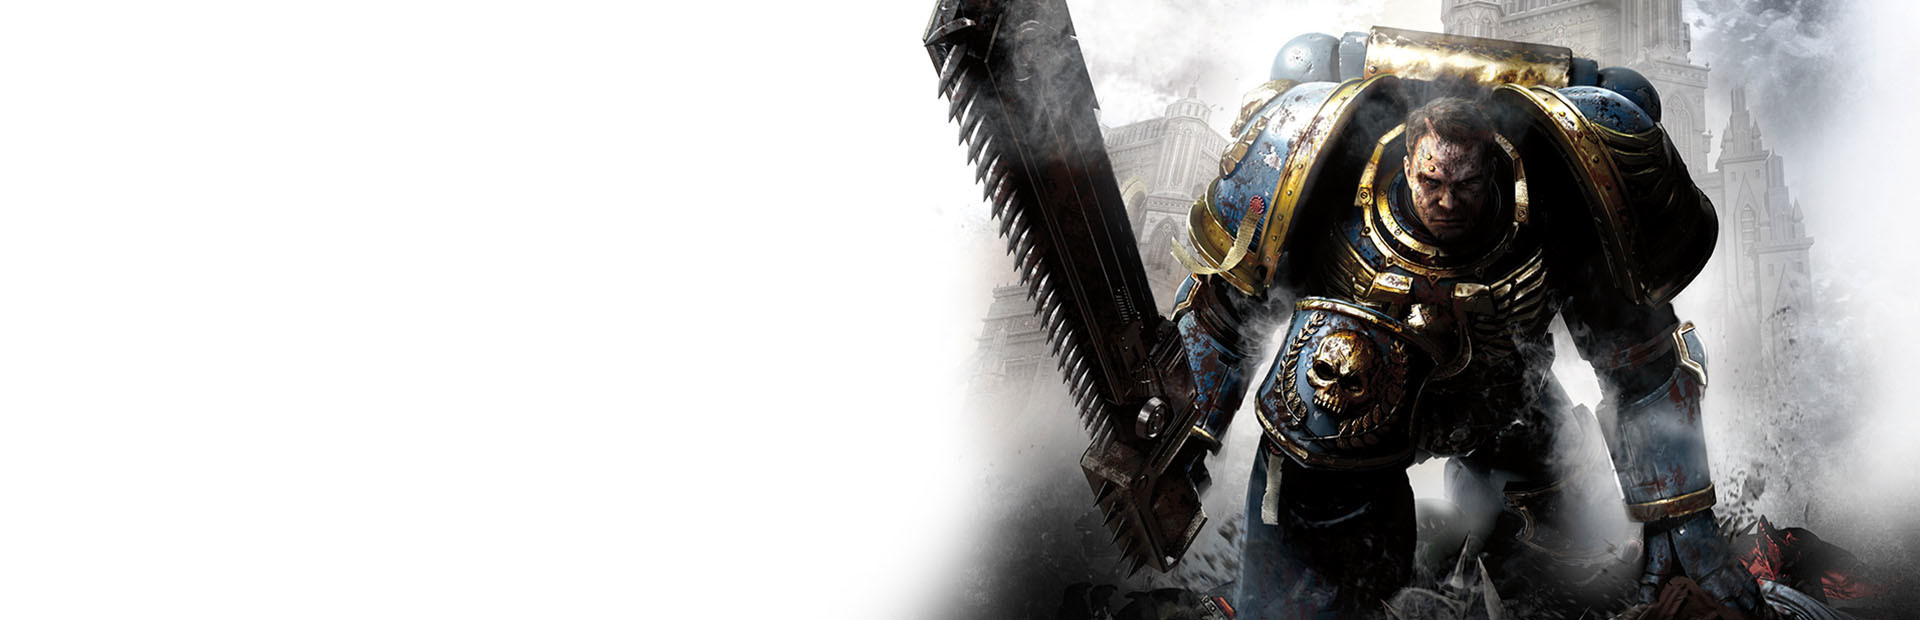 Warhammer 40,000: Space Marine - Anniversary Edition cover image